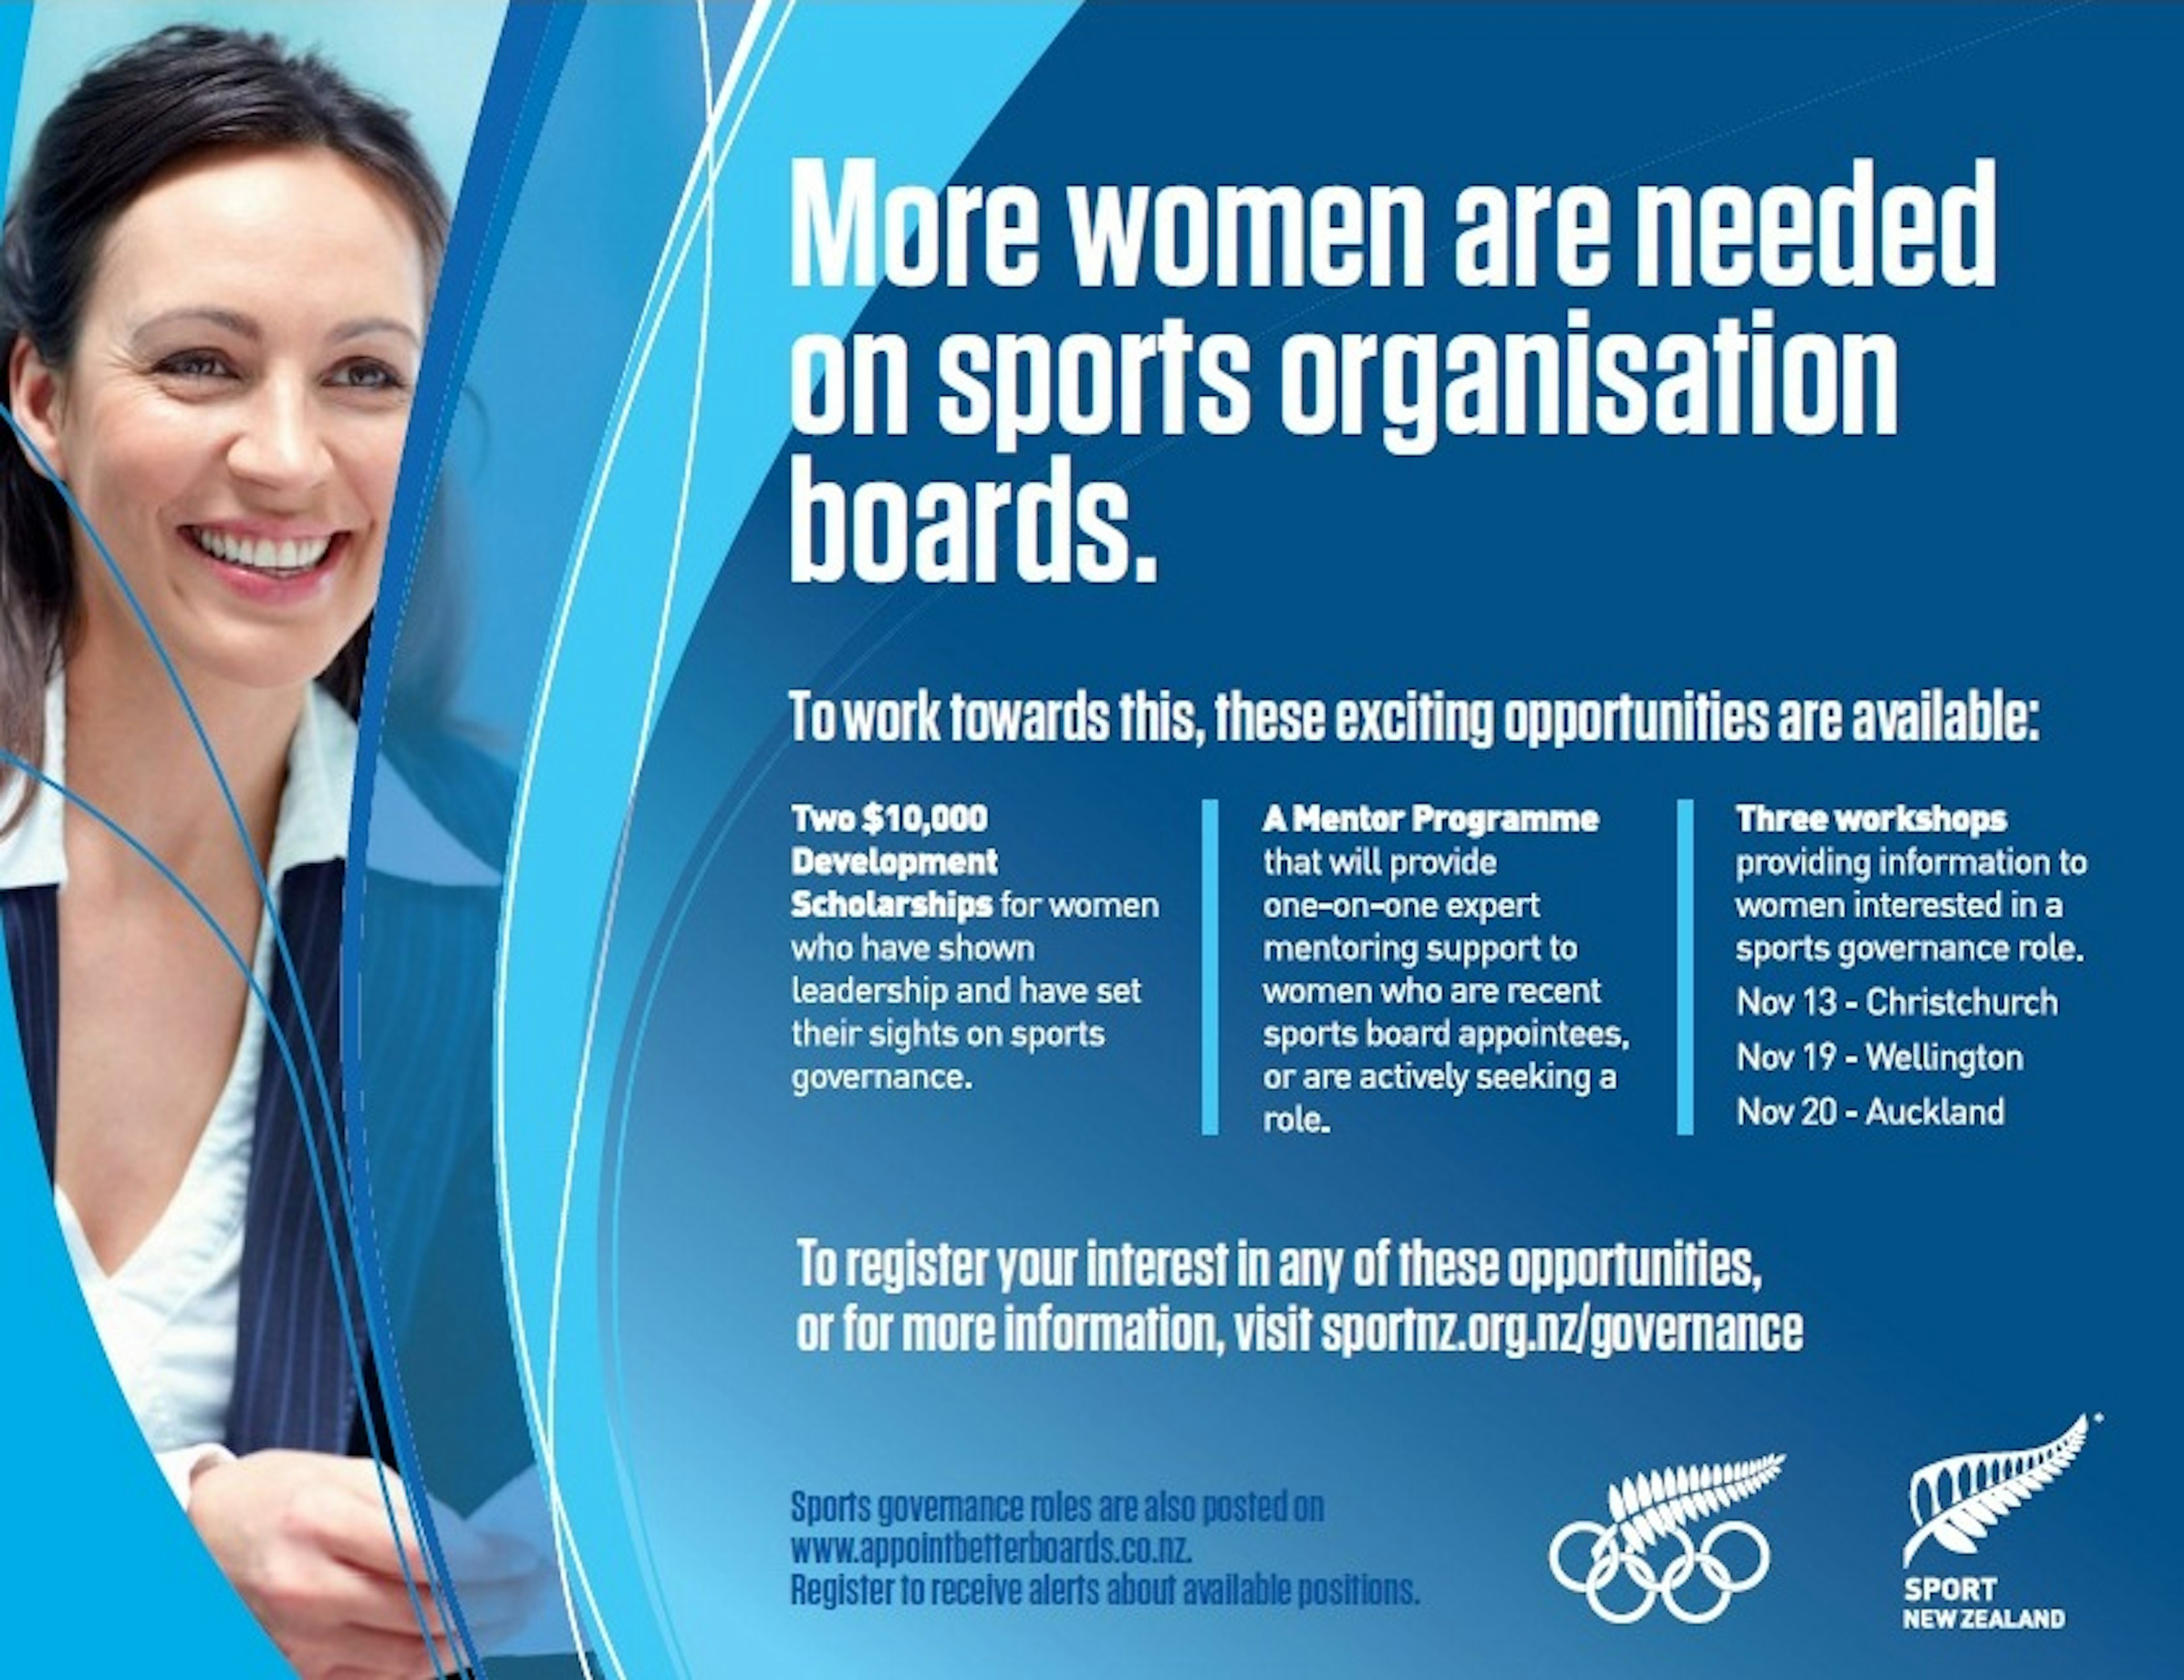 Development Scholarships for aspiring women sports board members